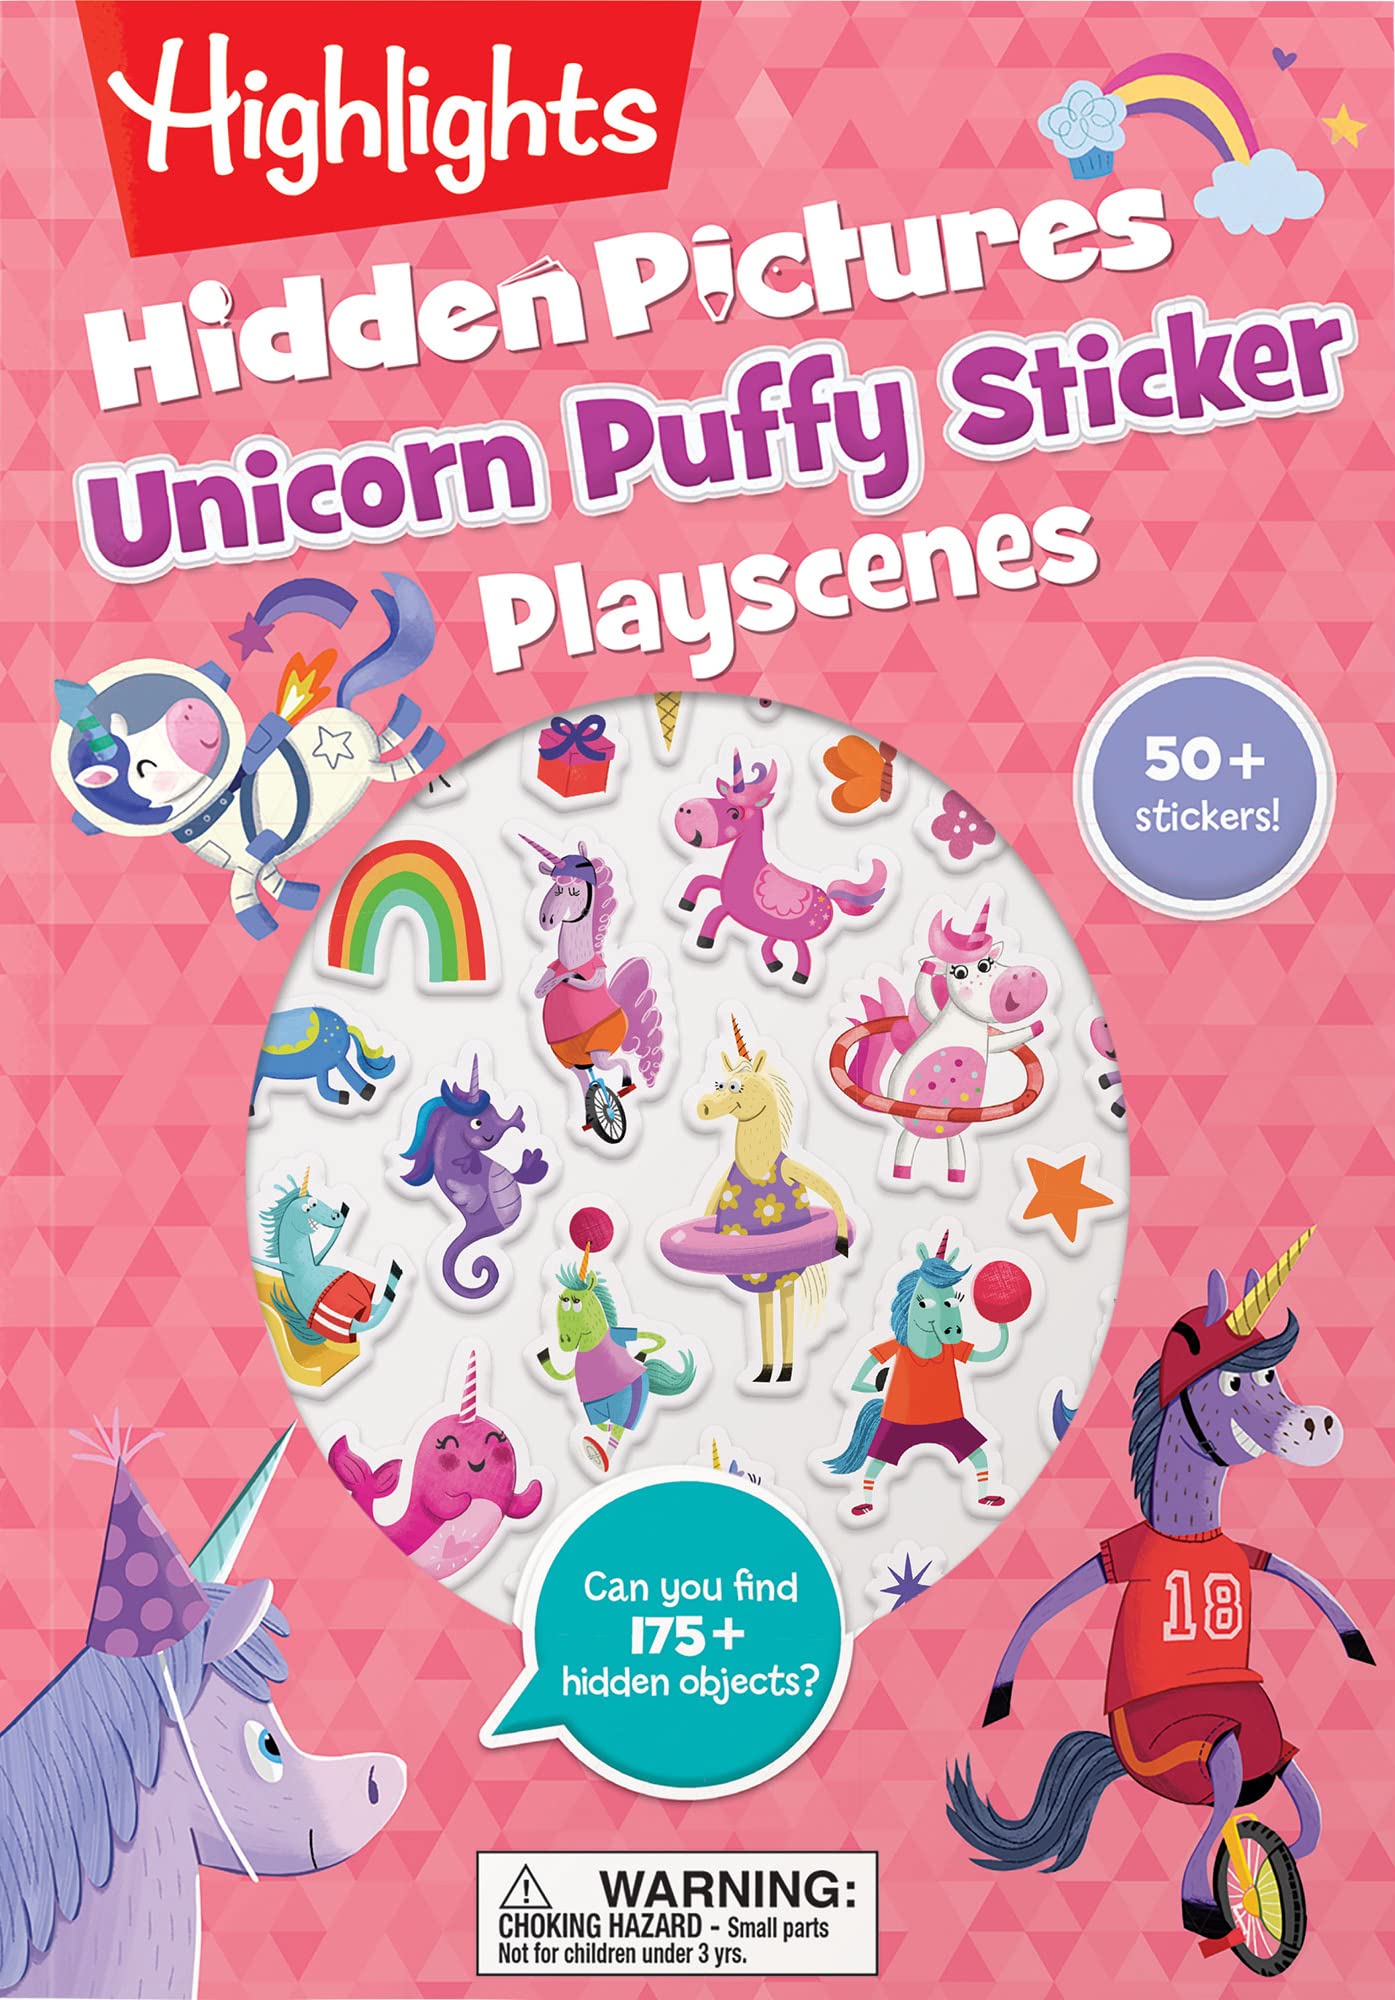 Unicorn Puffy Sticker Playscenes